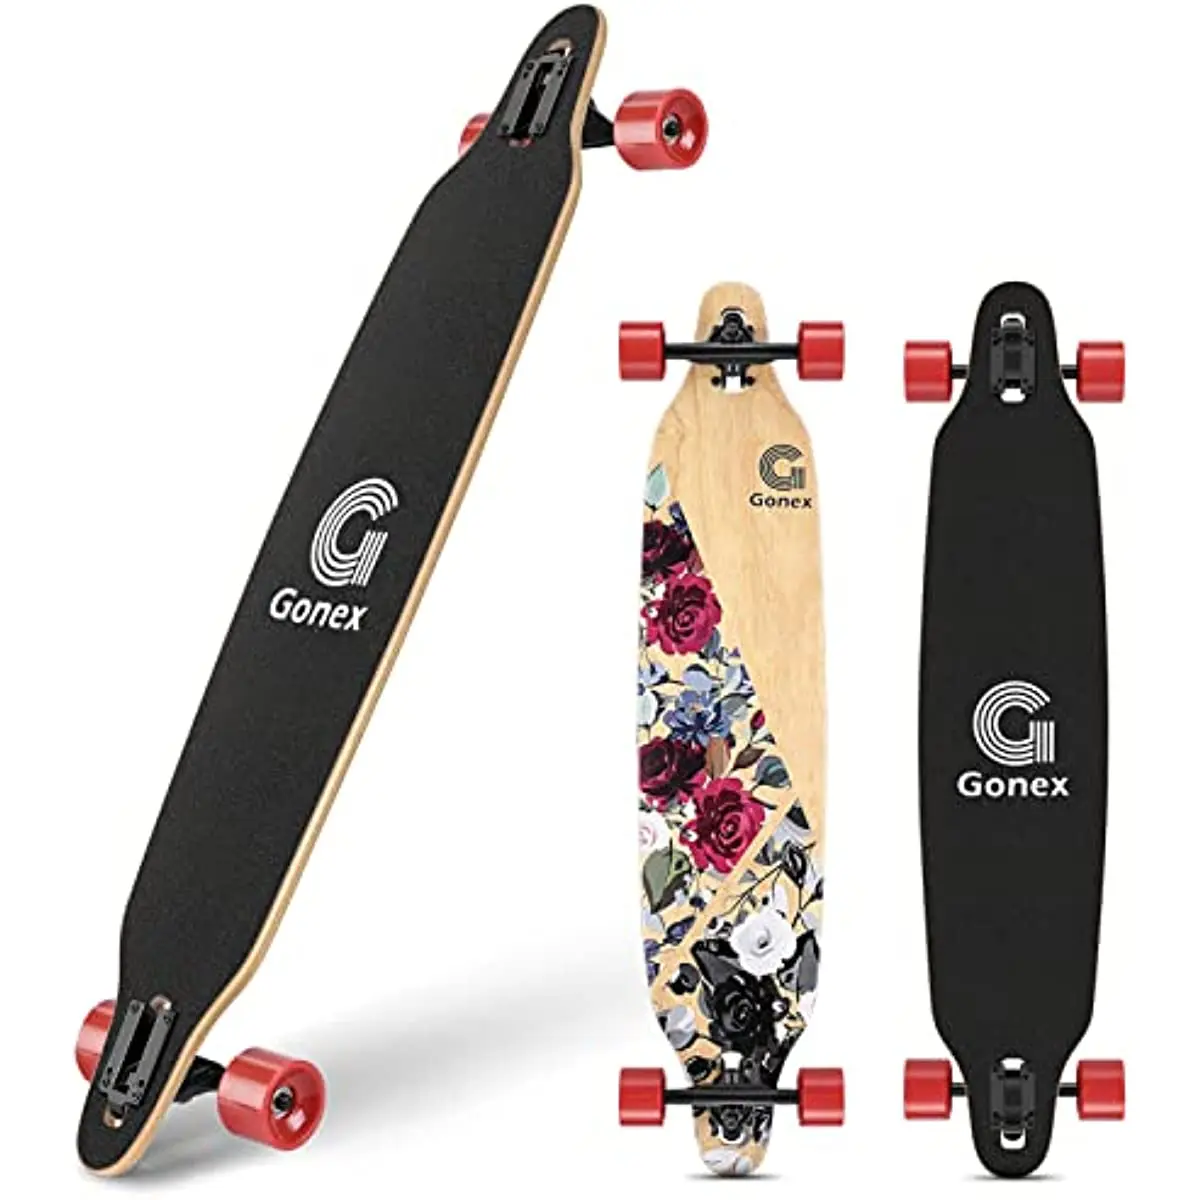 Gonex Longboard Skateboard, 42 Inch Drop Through Long Board Complete 9 Ply Maple Cruiser Carver for Girls Boys Adults Beginners